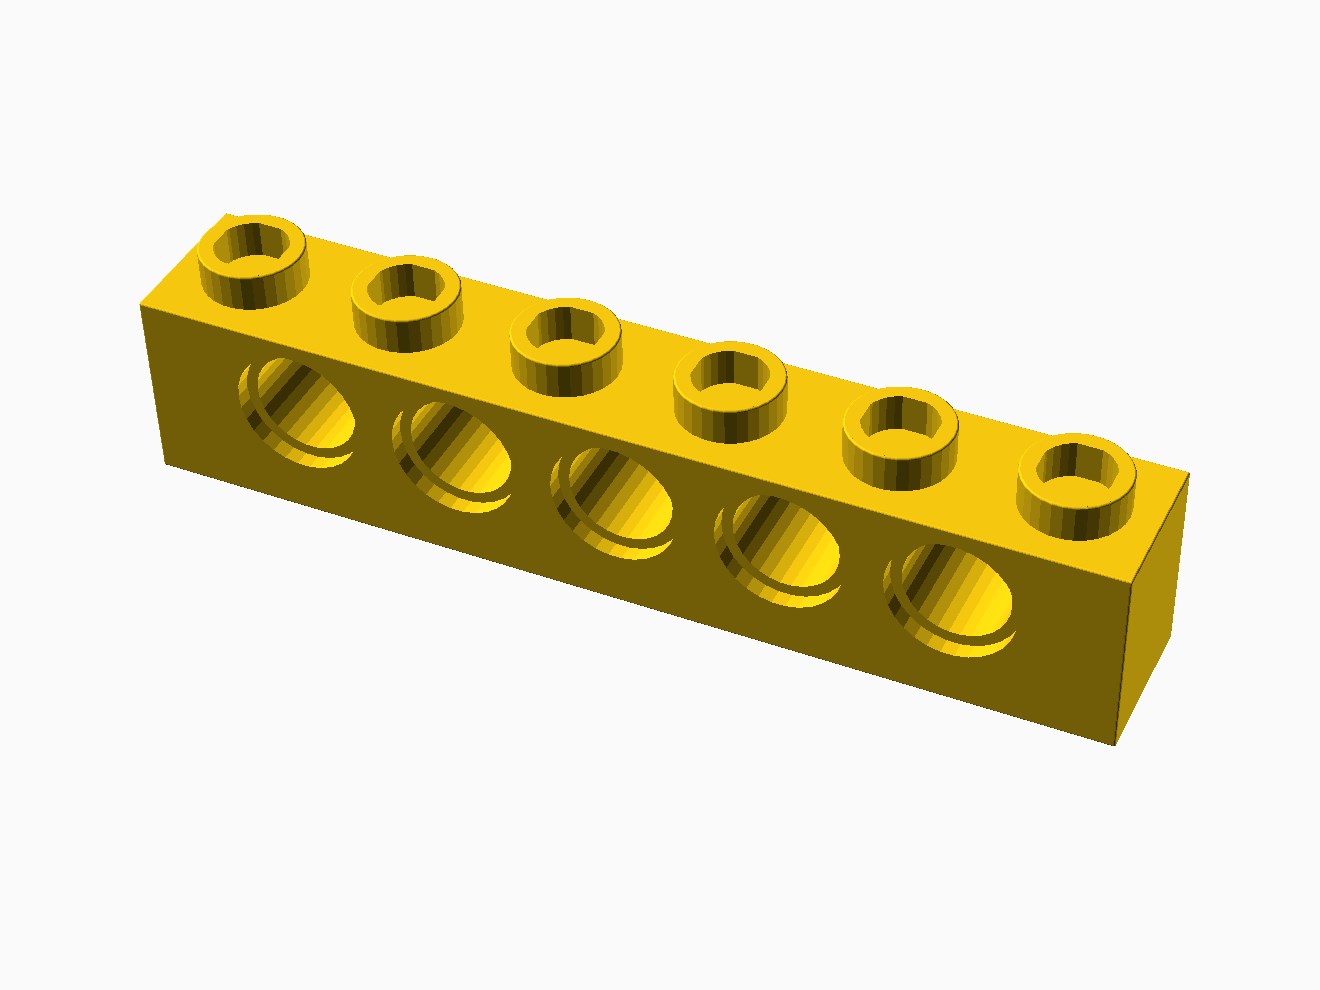 3D printable model of a LEGO Technic 6x1 Brick.